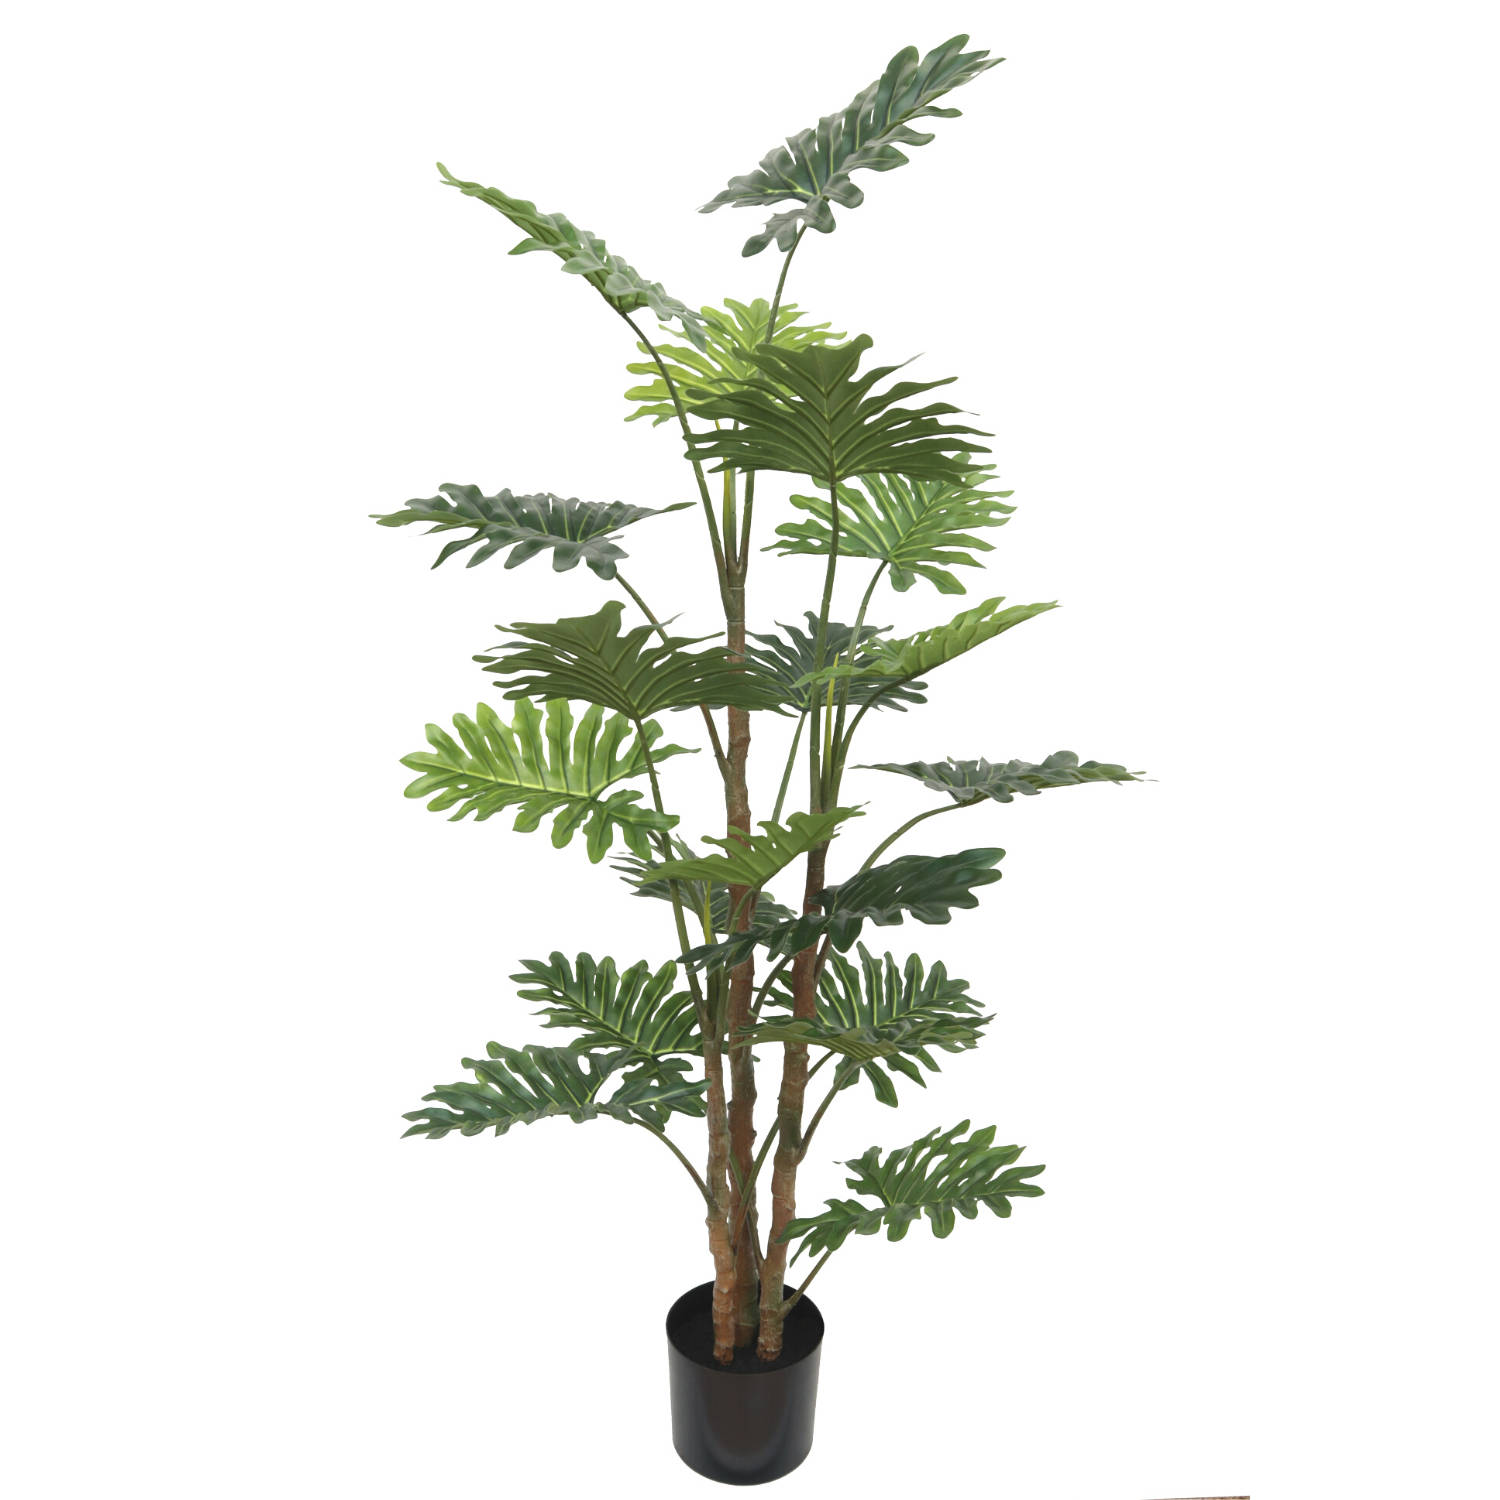 Philodendron Kunstplant 160cm | Kunstplant voor binnen | Nep Philodendron plant| Kunst Philodendron 160cm